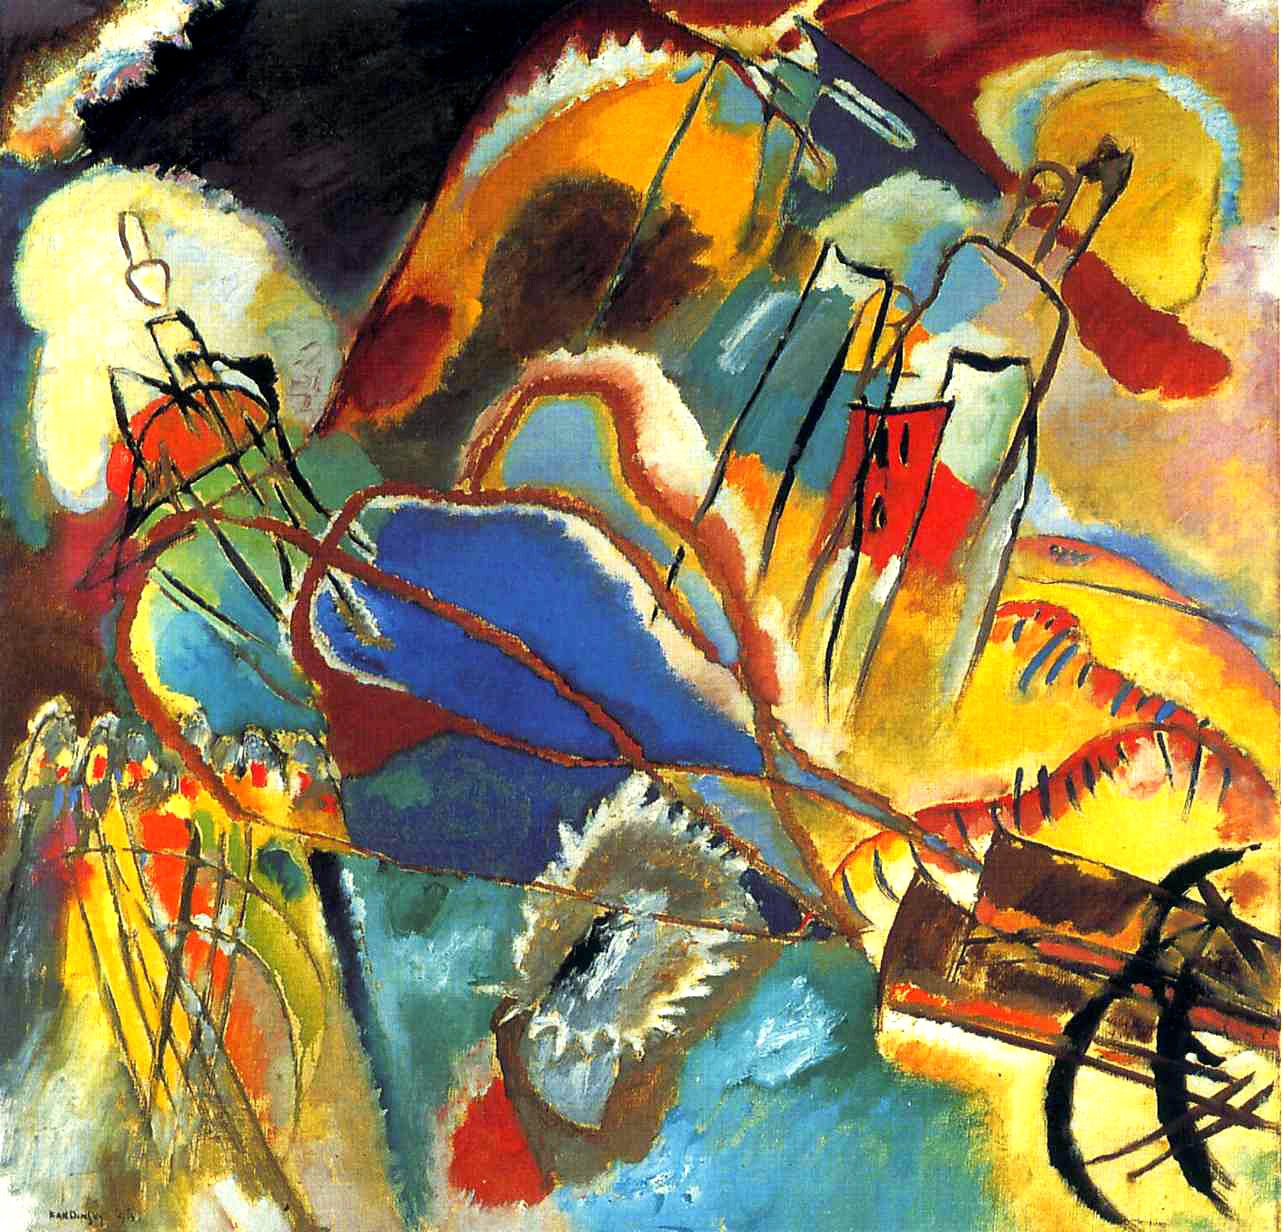 Wassily+Kandinsky-1866-1944 (393).jpg